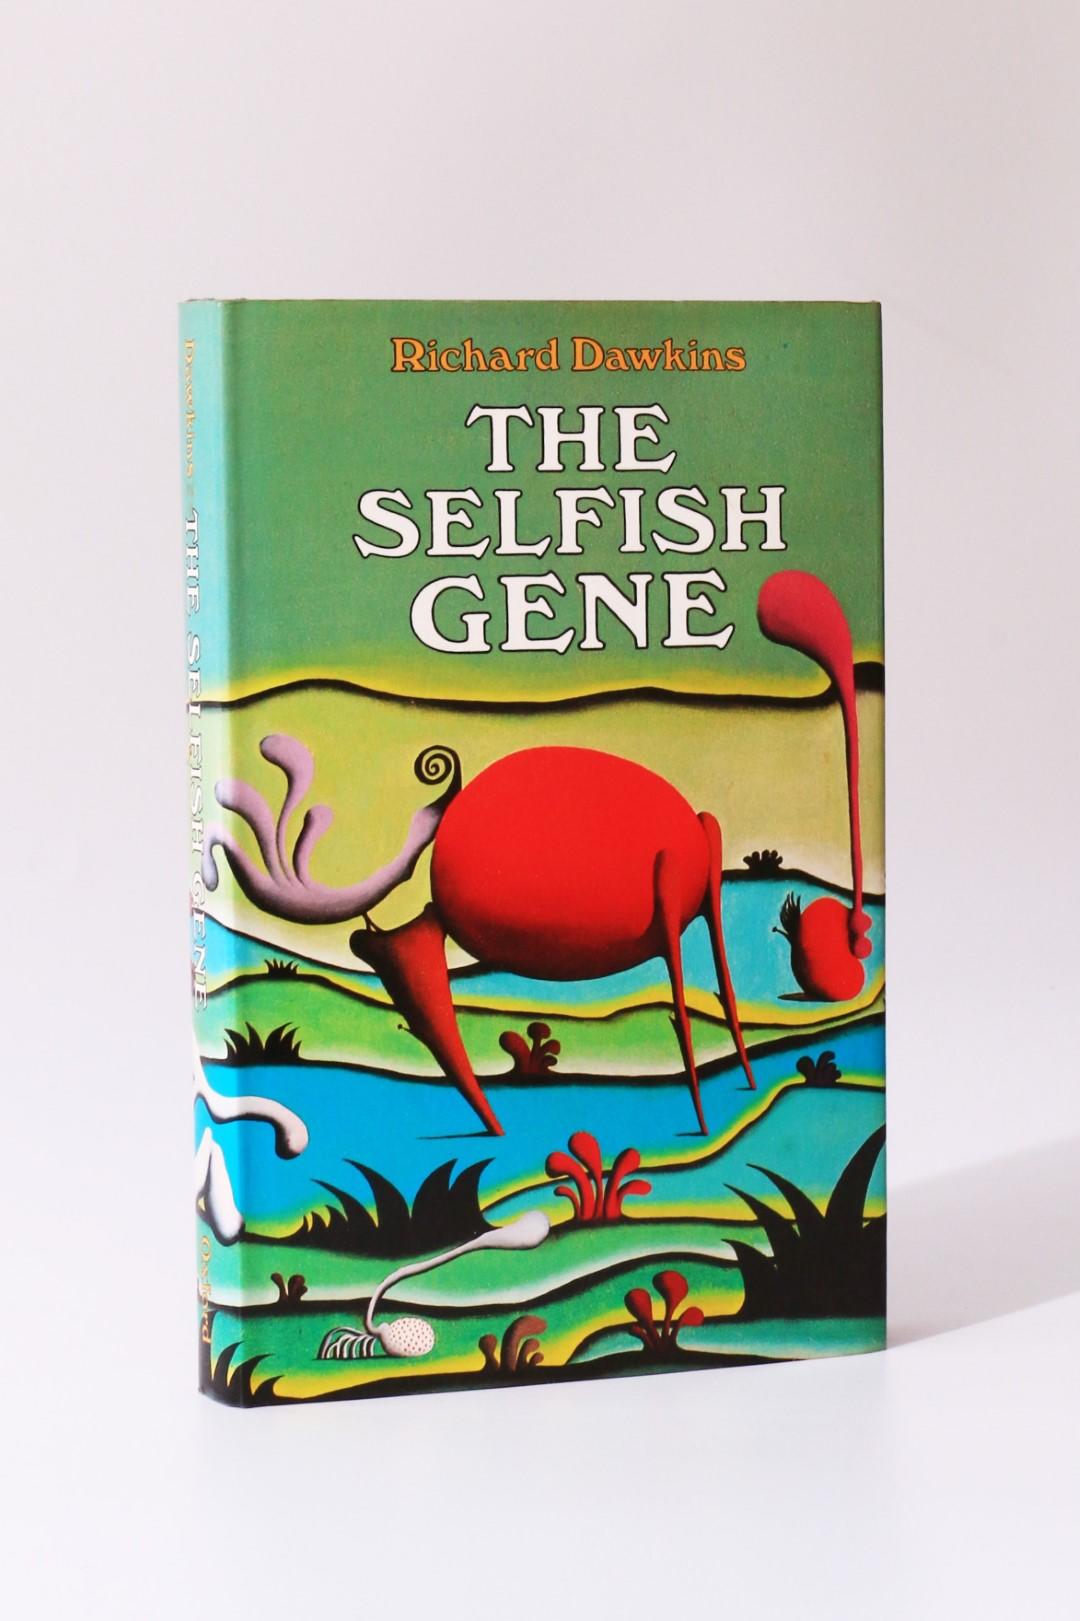 Richard Dawkins - The Selfish Gene - Oxford University Press, 1976, First Edition.